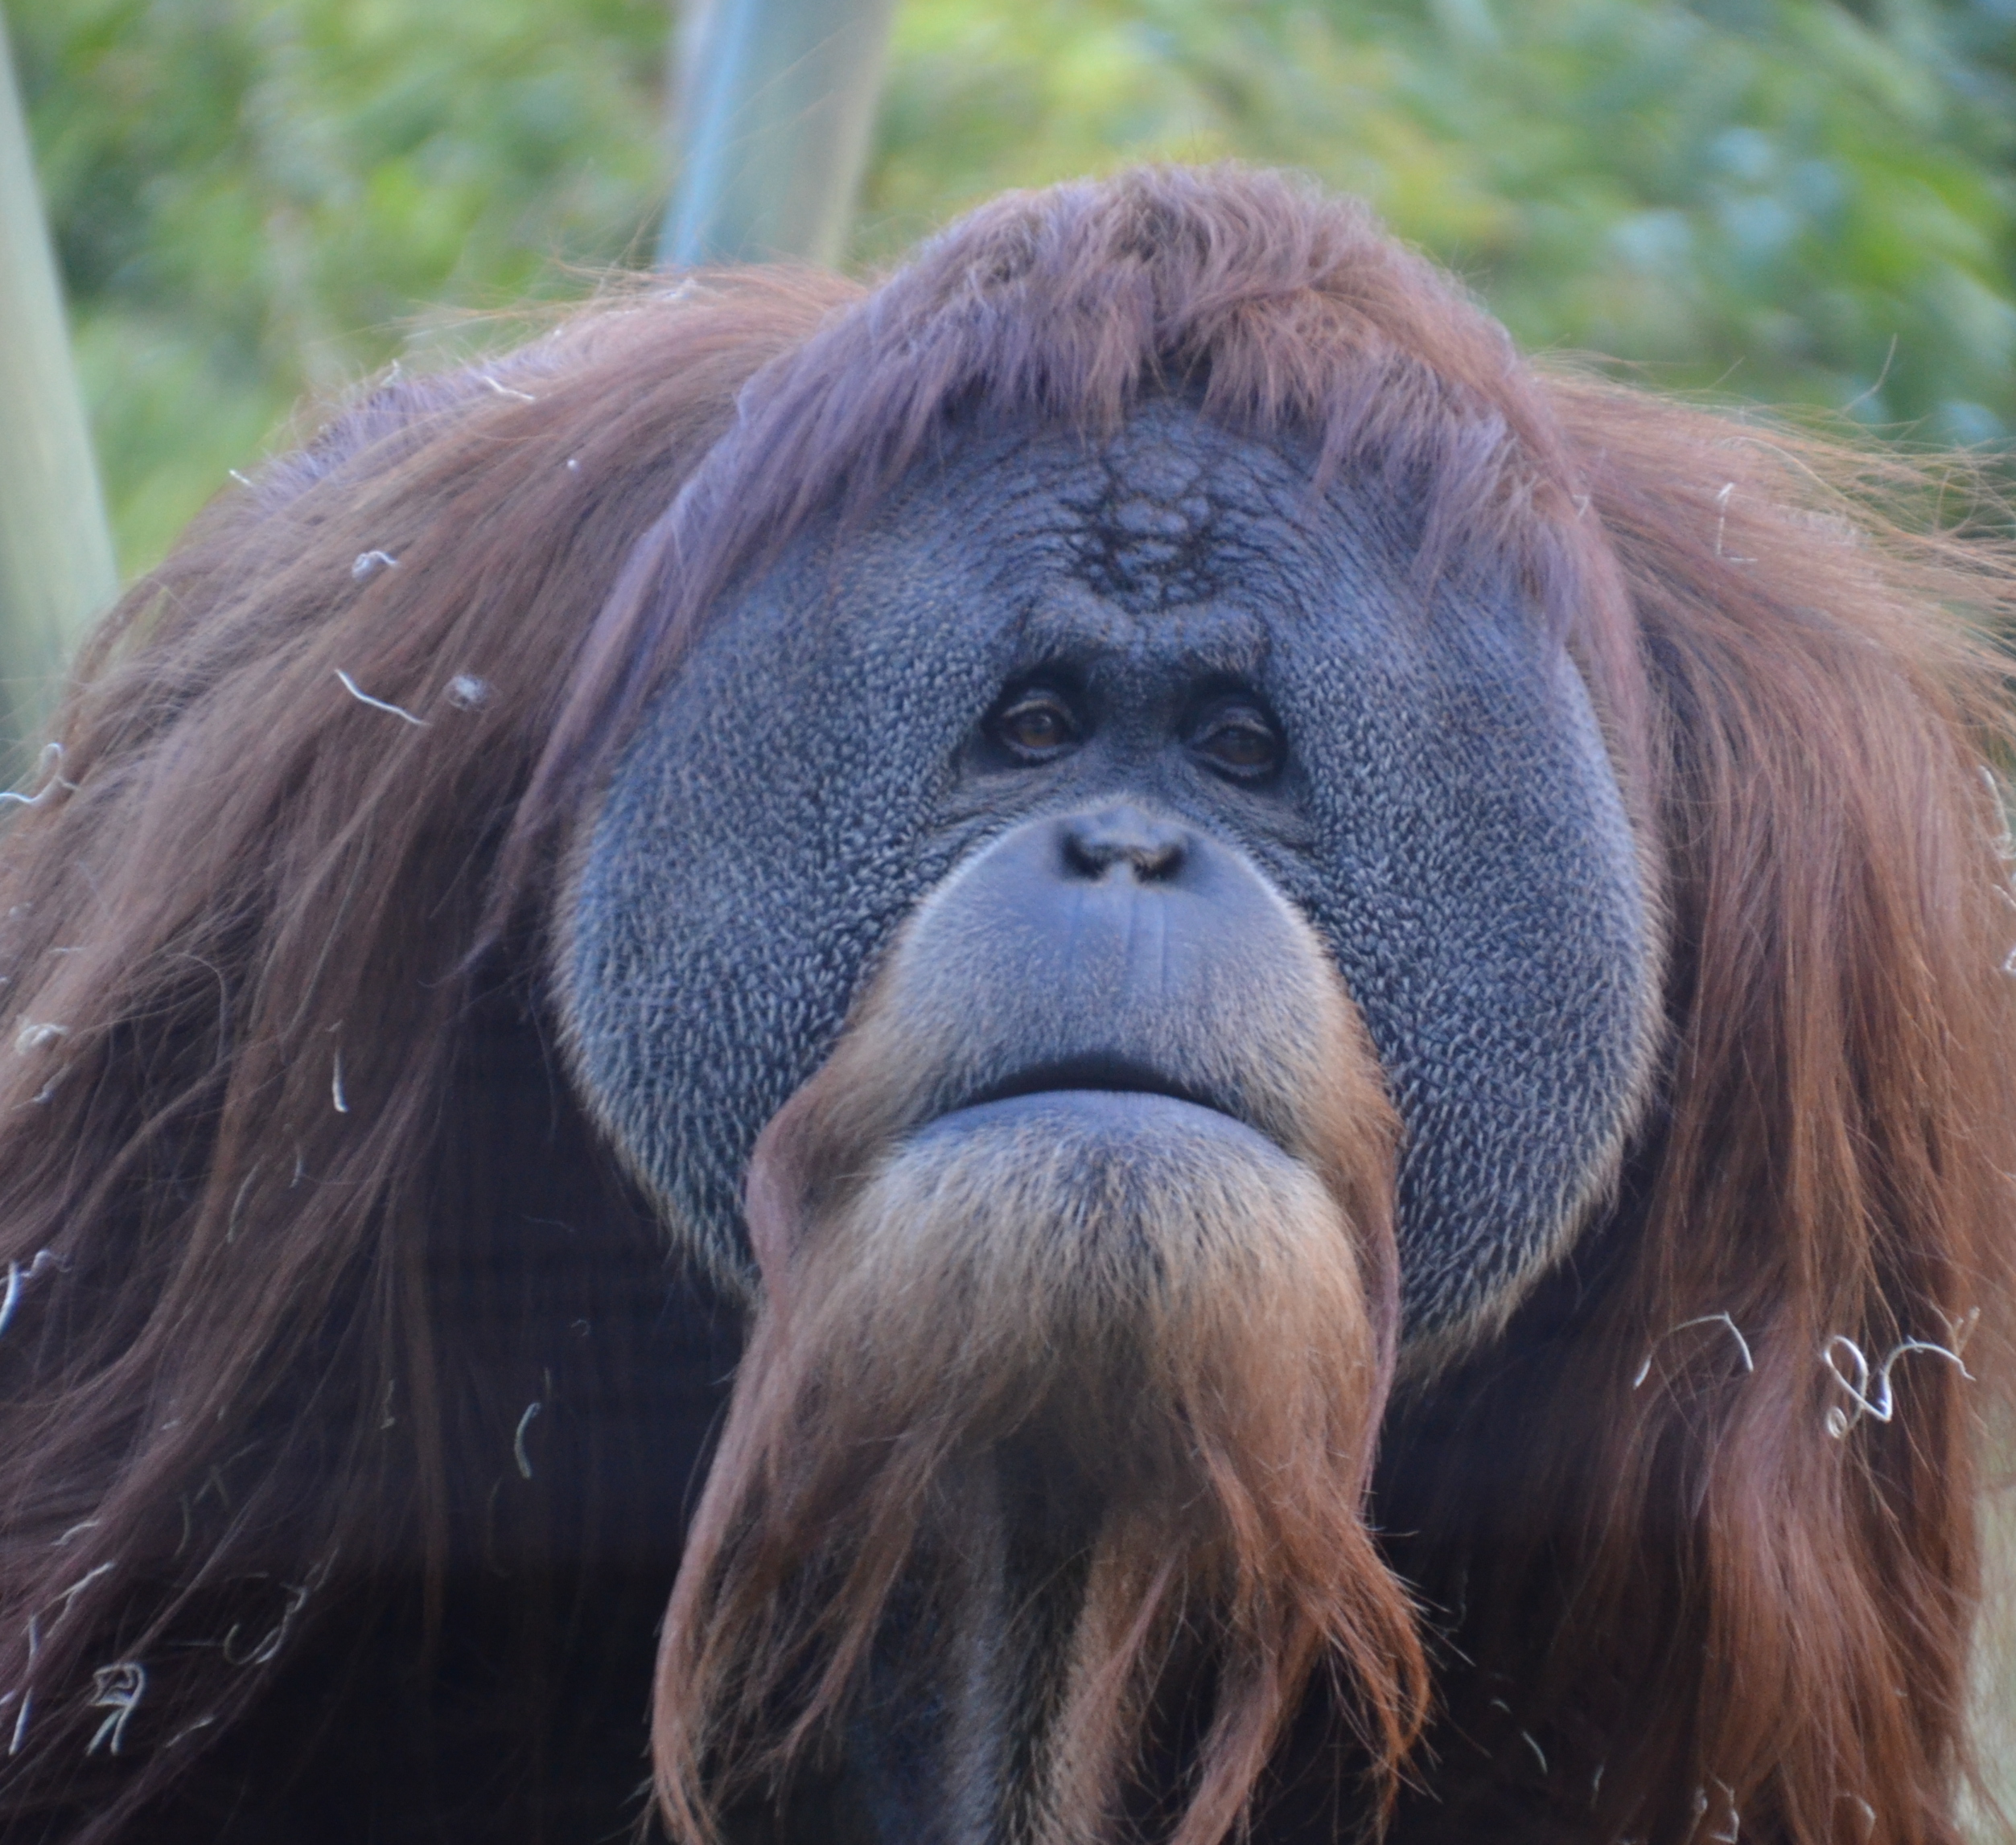 mad orangutan